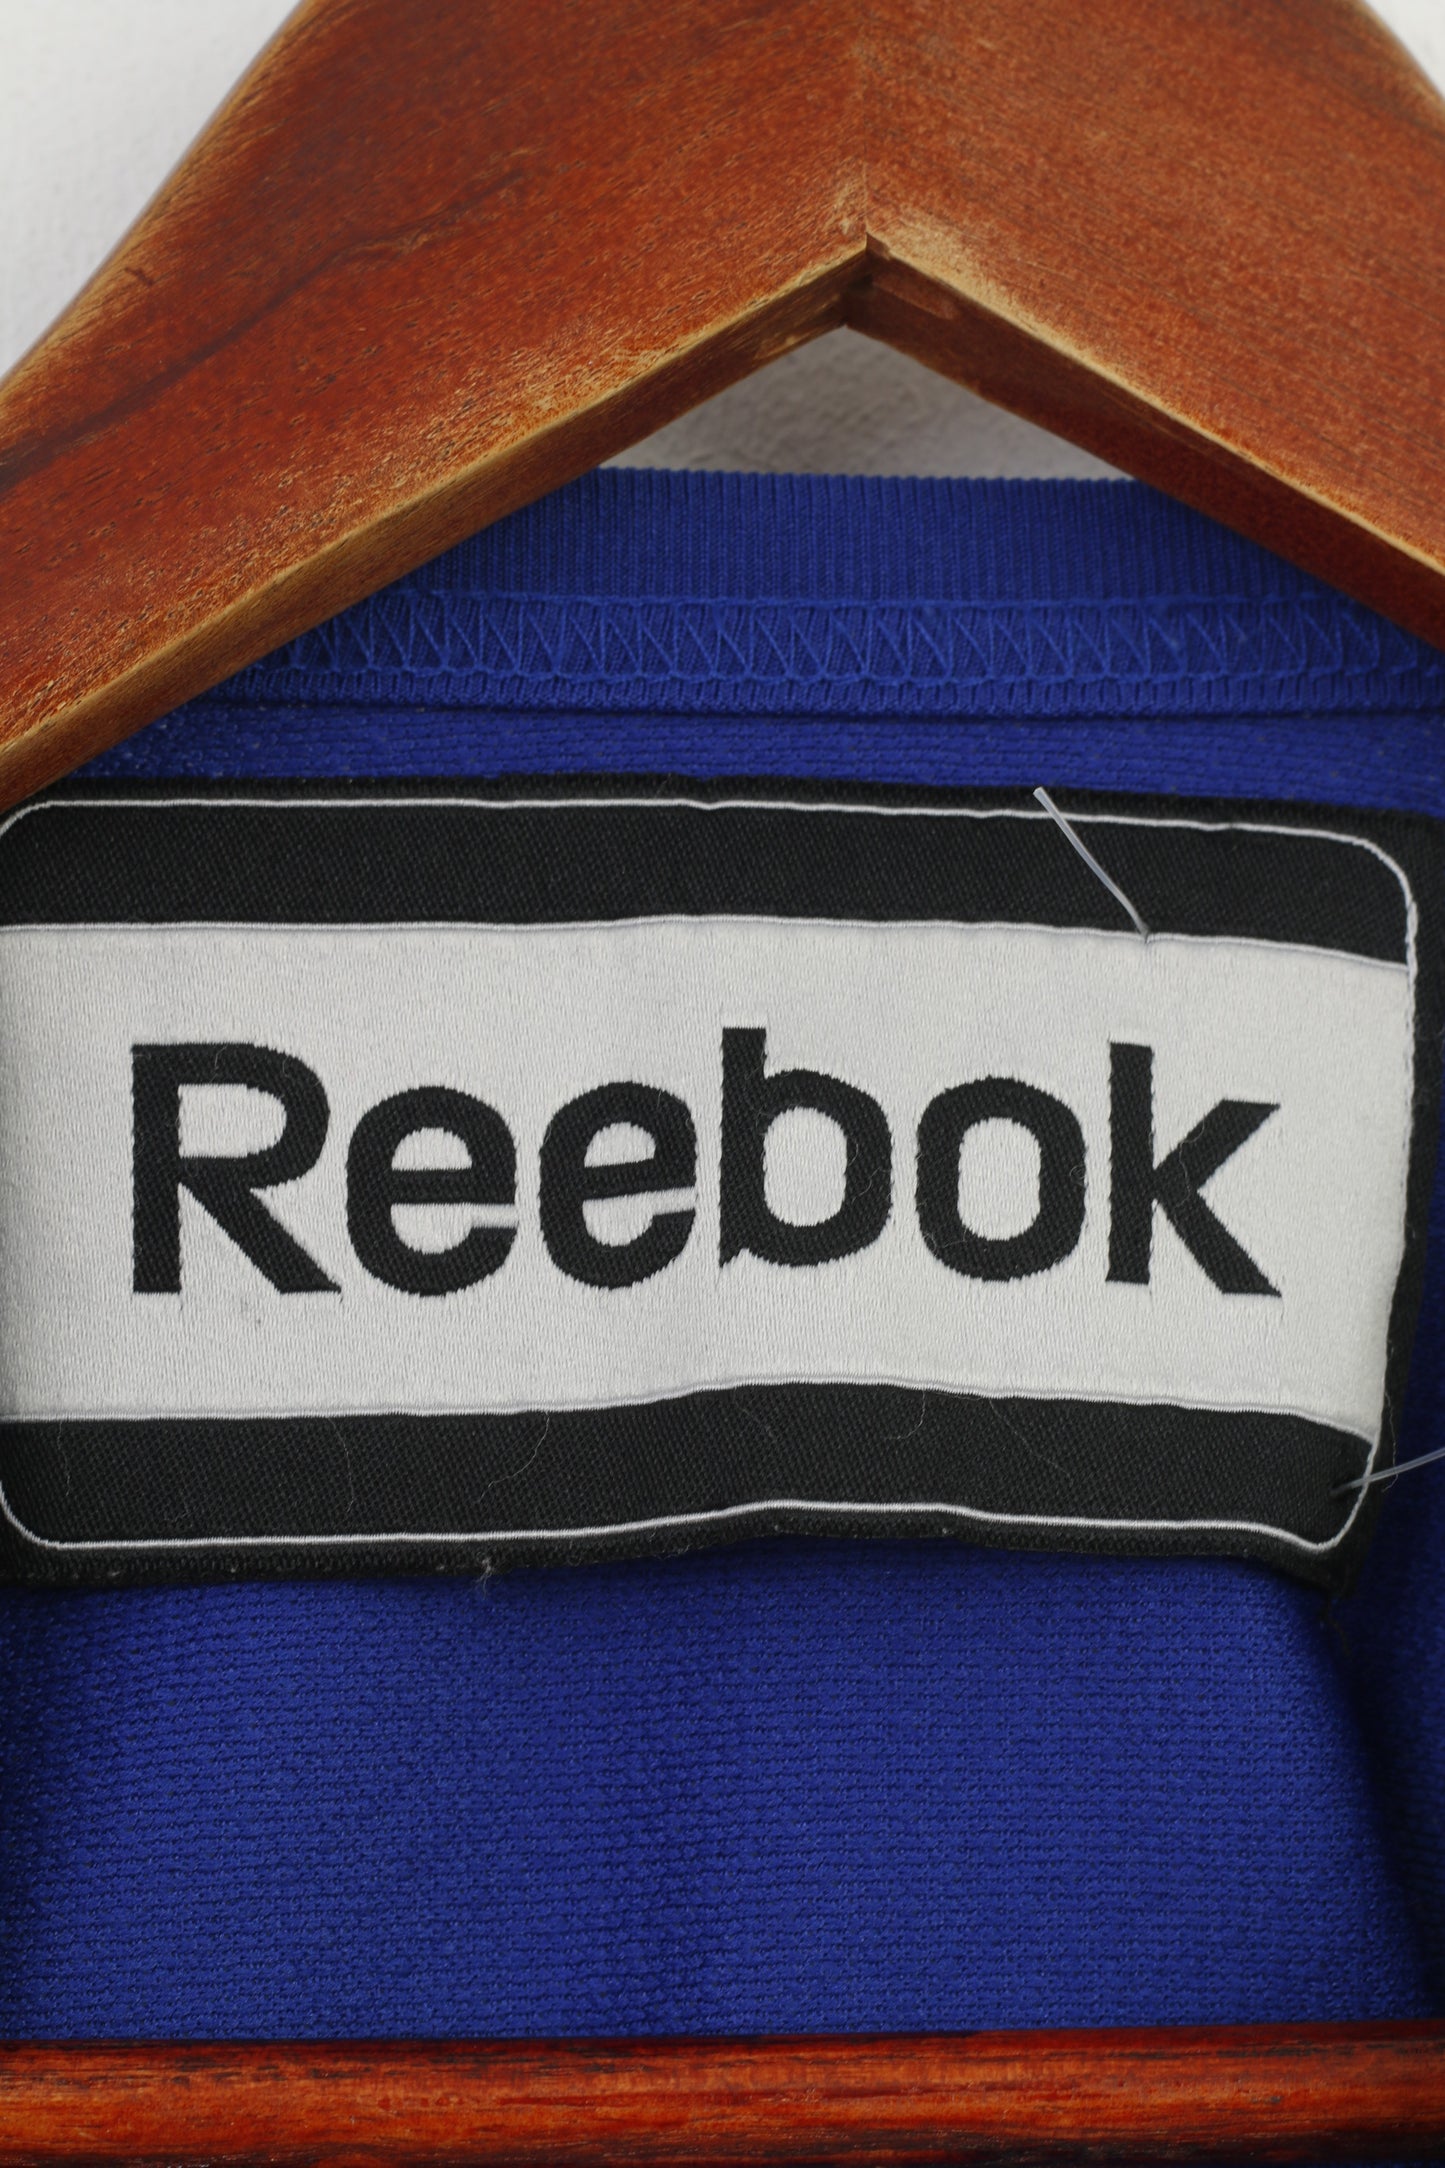 Maglia Reebok da ragazzo 130 150 cm Navy Bandyskolan Football V Neck Training Vintage Jersey Top